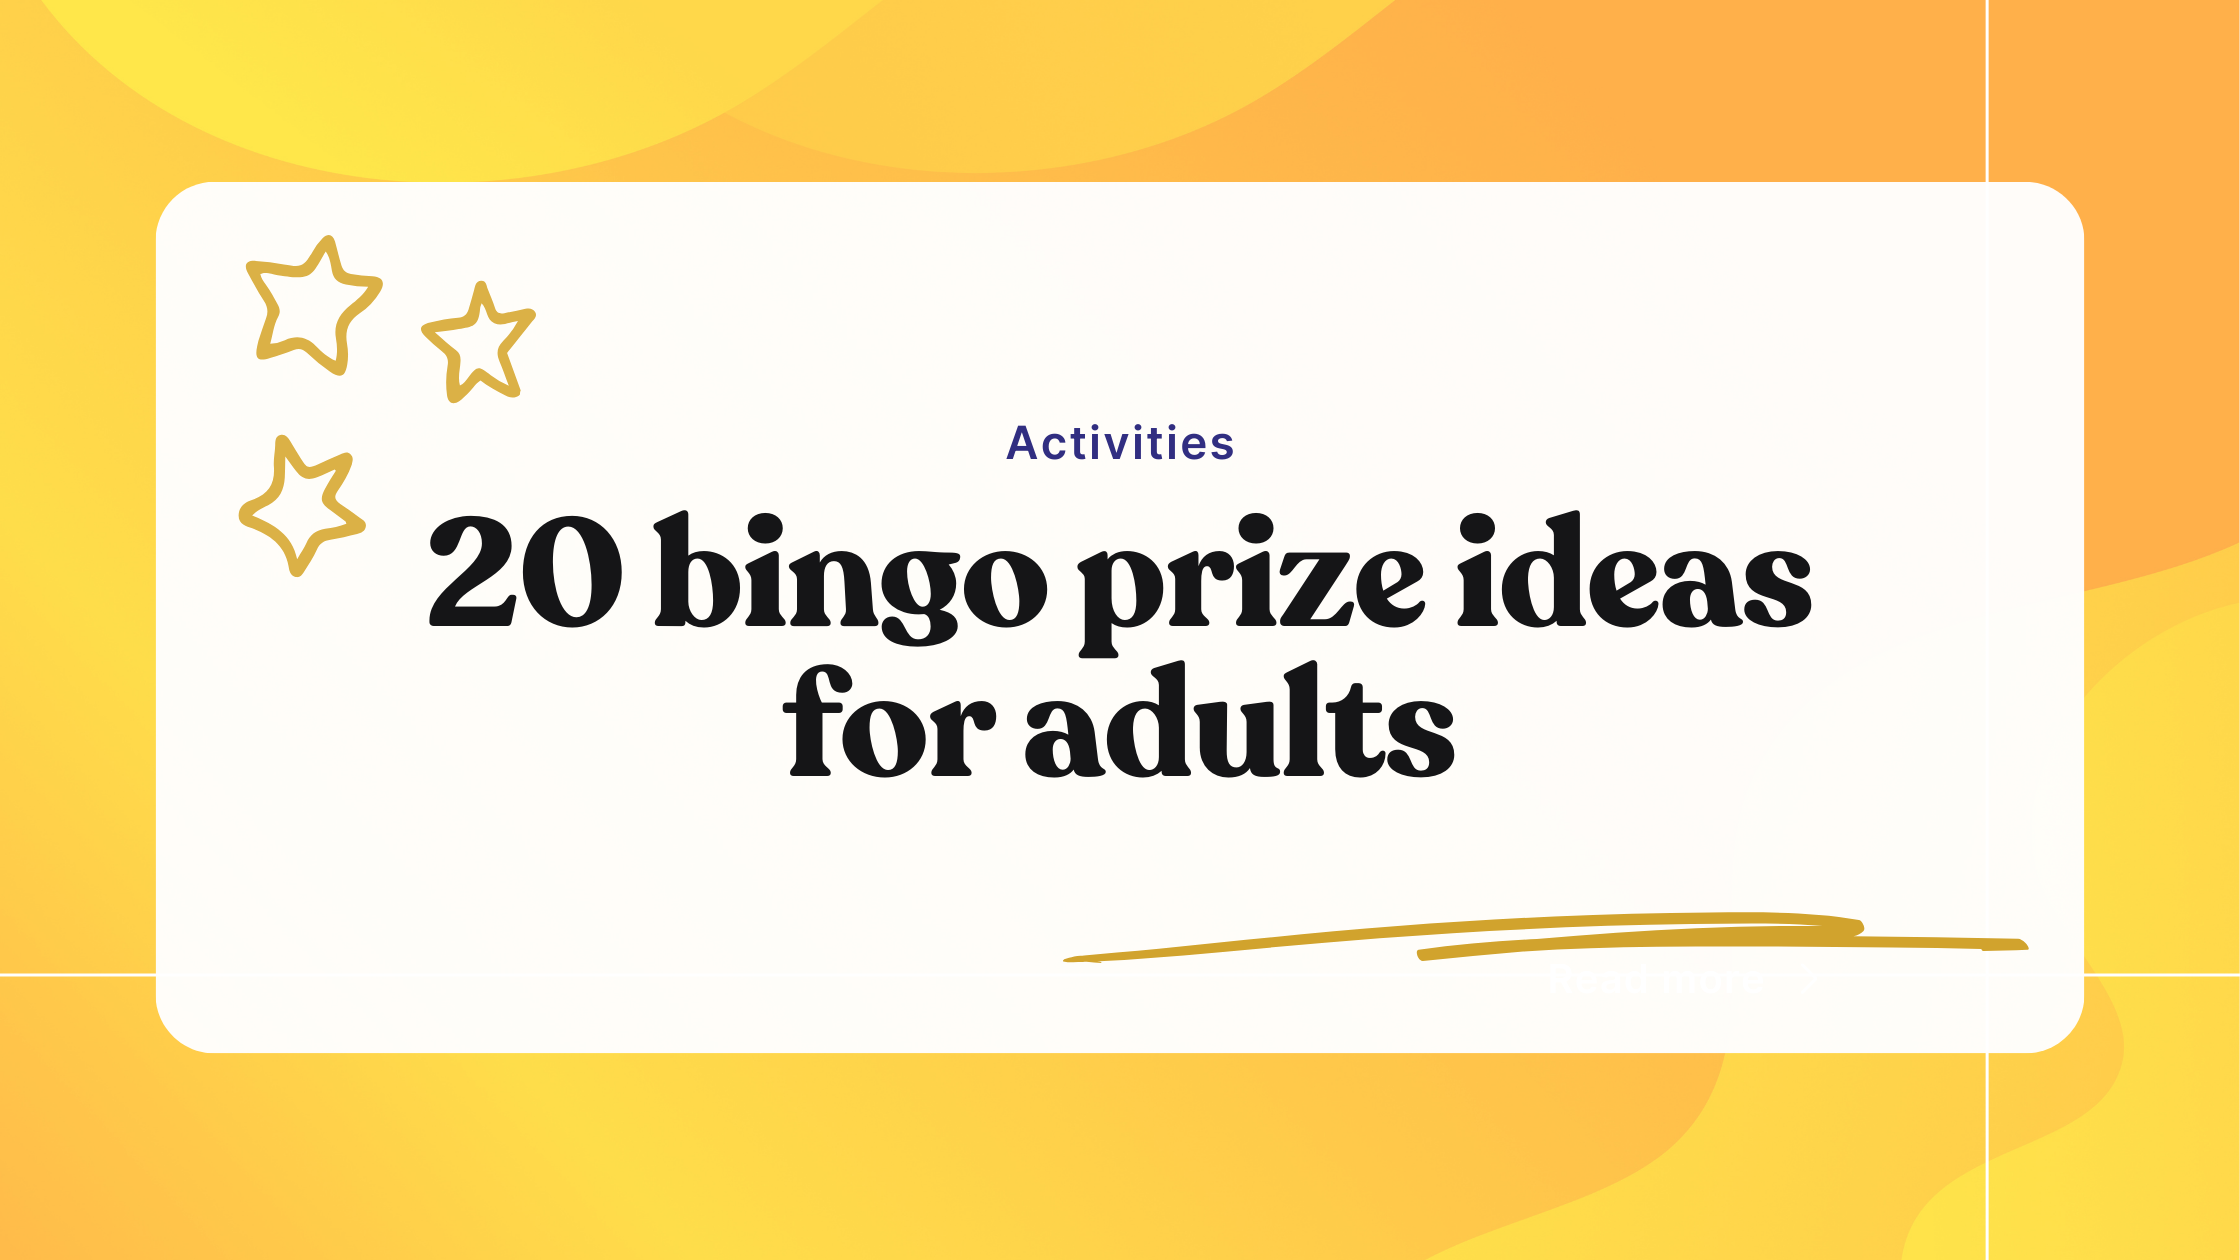 20 bingo prize ideas for adults